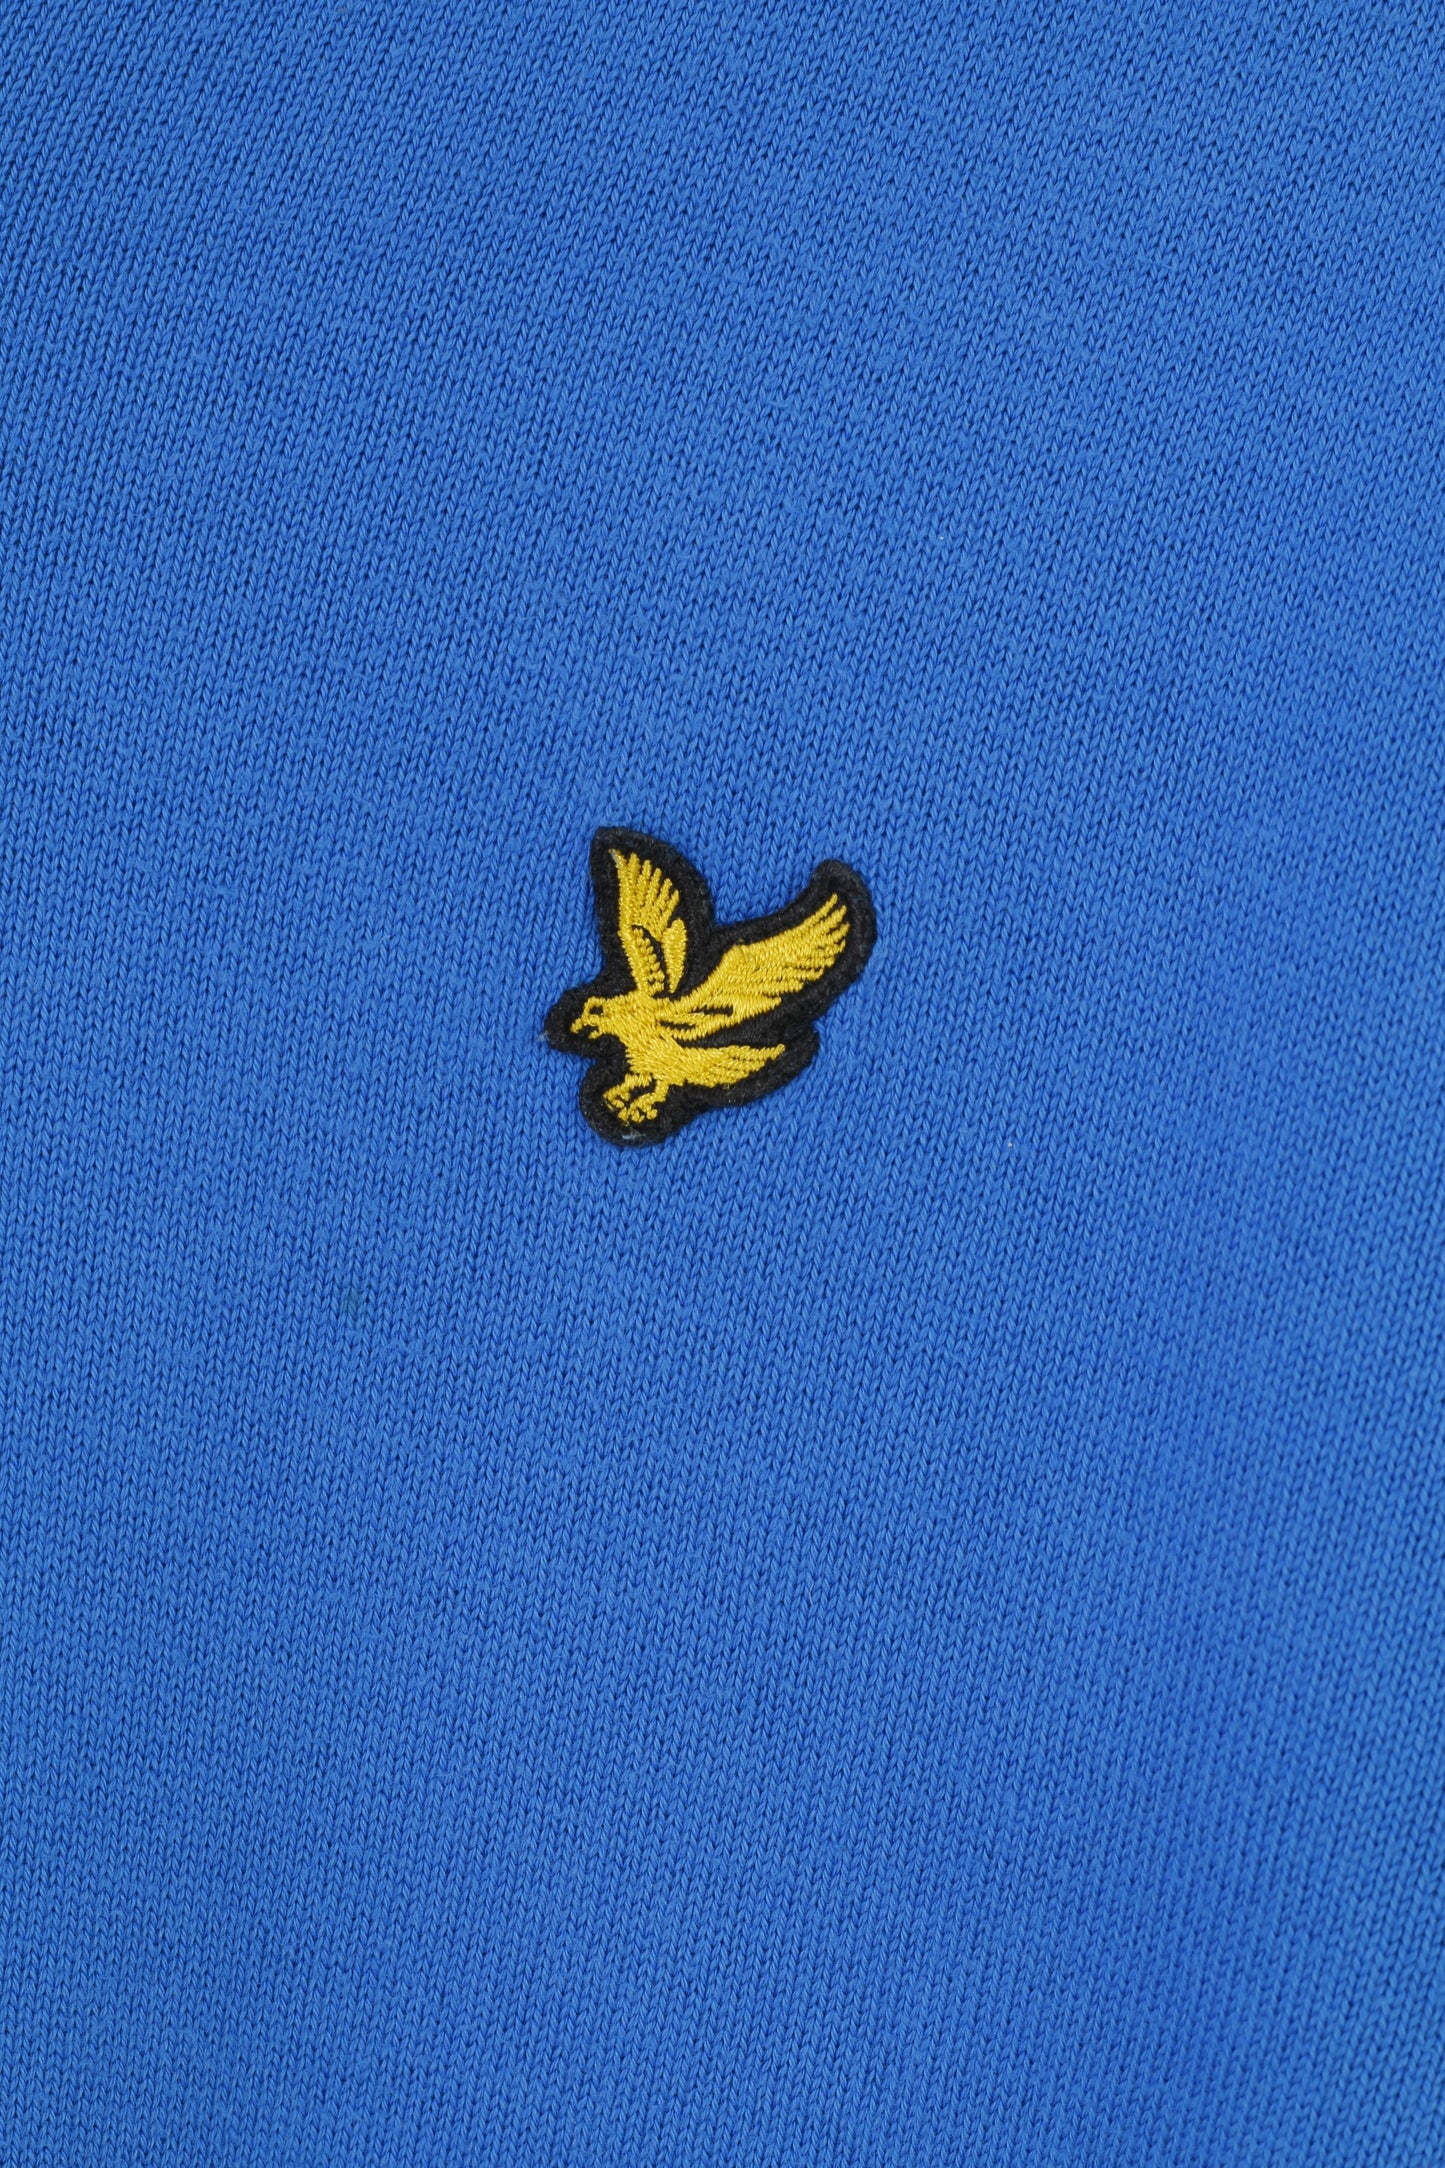 Lyle & Scott Men M Jumper V Neck Blue Logo Scotland Long Sleeve Cotton Sweater Top